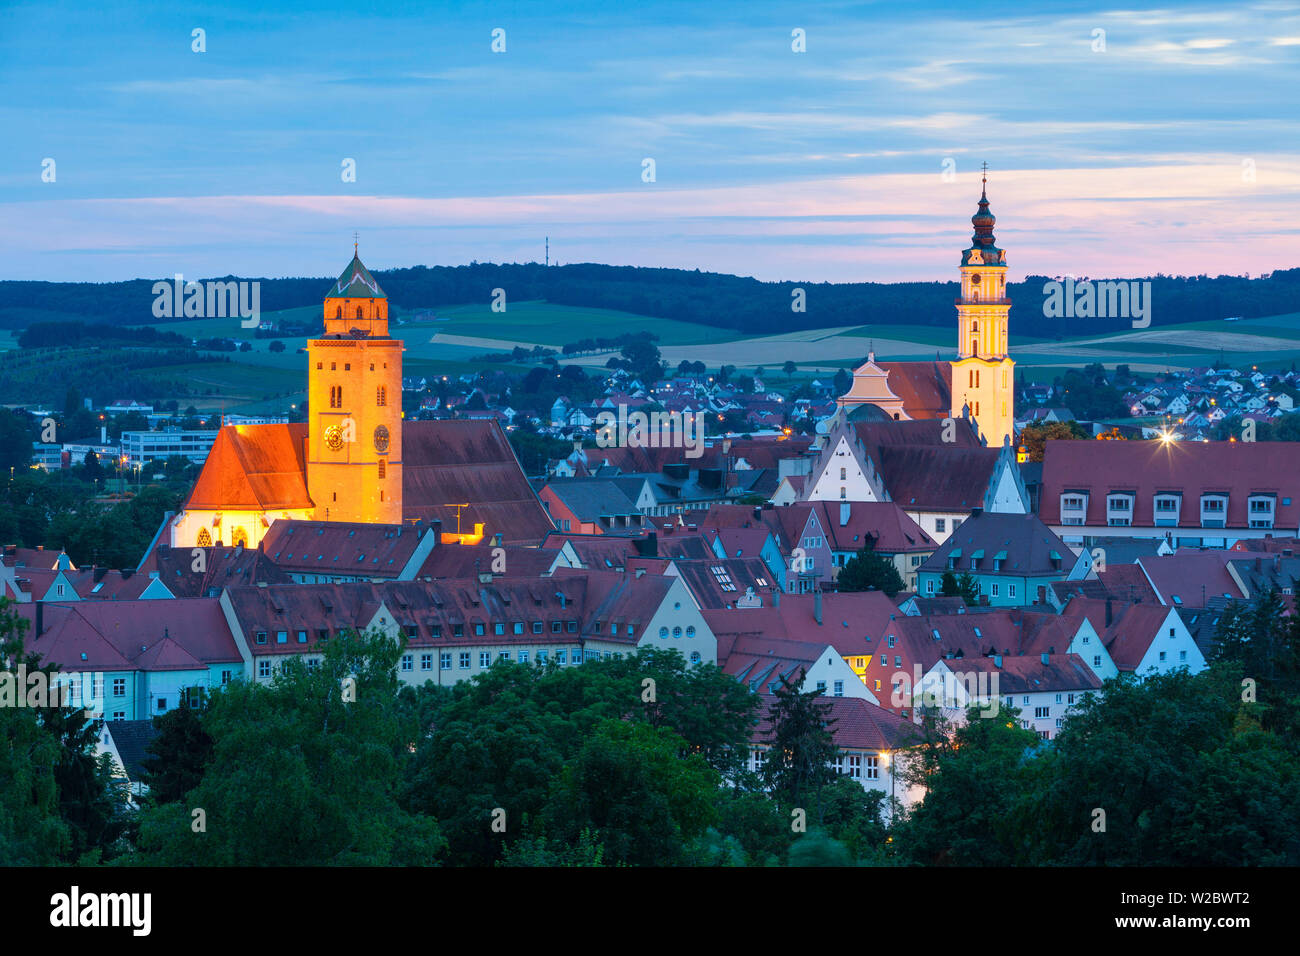 Elevated view over Donauworth Old Town illuminated at Dusk, Donauworth, Swabia, Bavaria, Germany Stock Photo